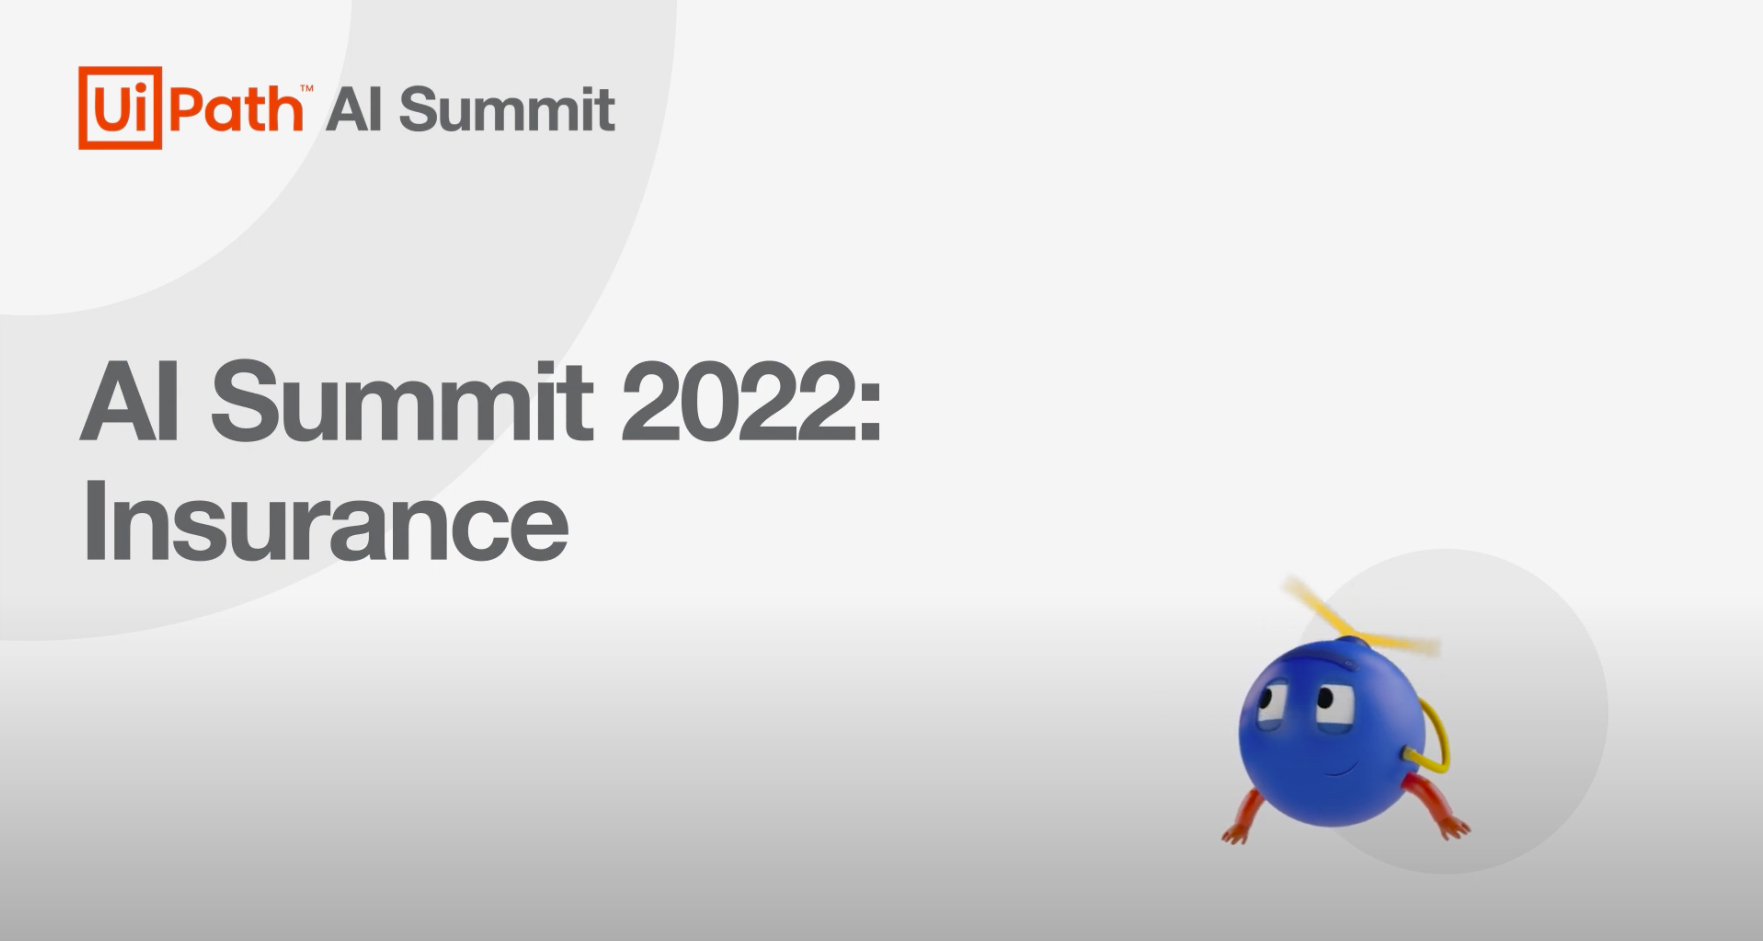 UiPath AI Summit 2022: AI in Insurance